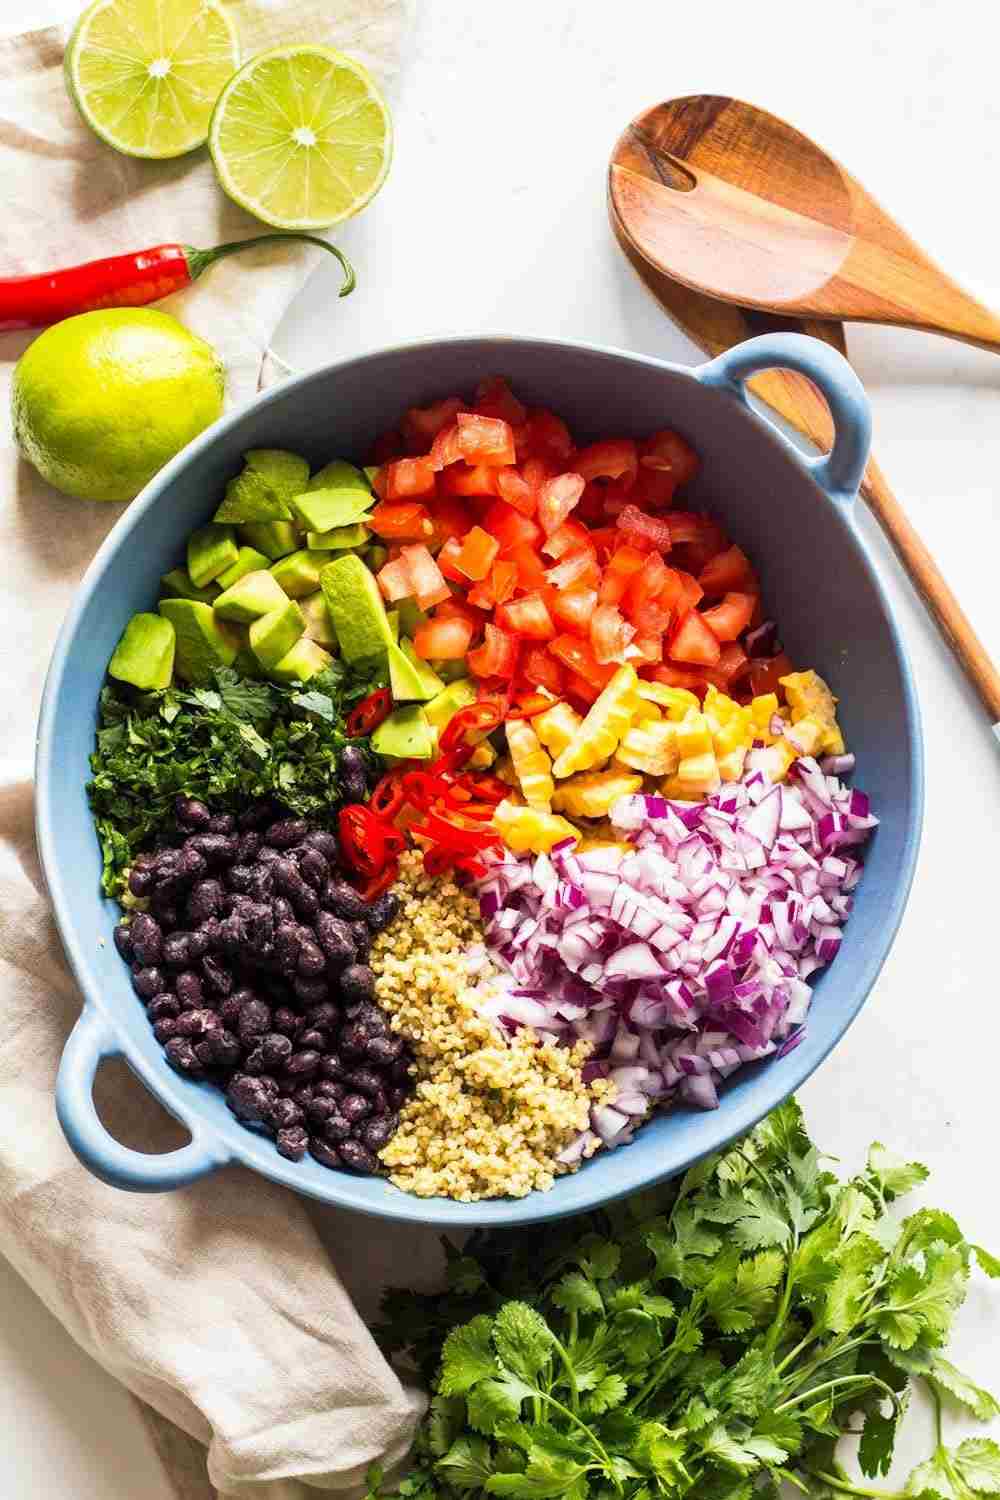 frische zutaten mexikanischer schichtsalat wie lila zwiebeln petersilie avocado quinoa hähnchenfleisch